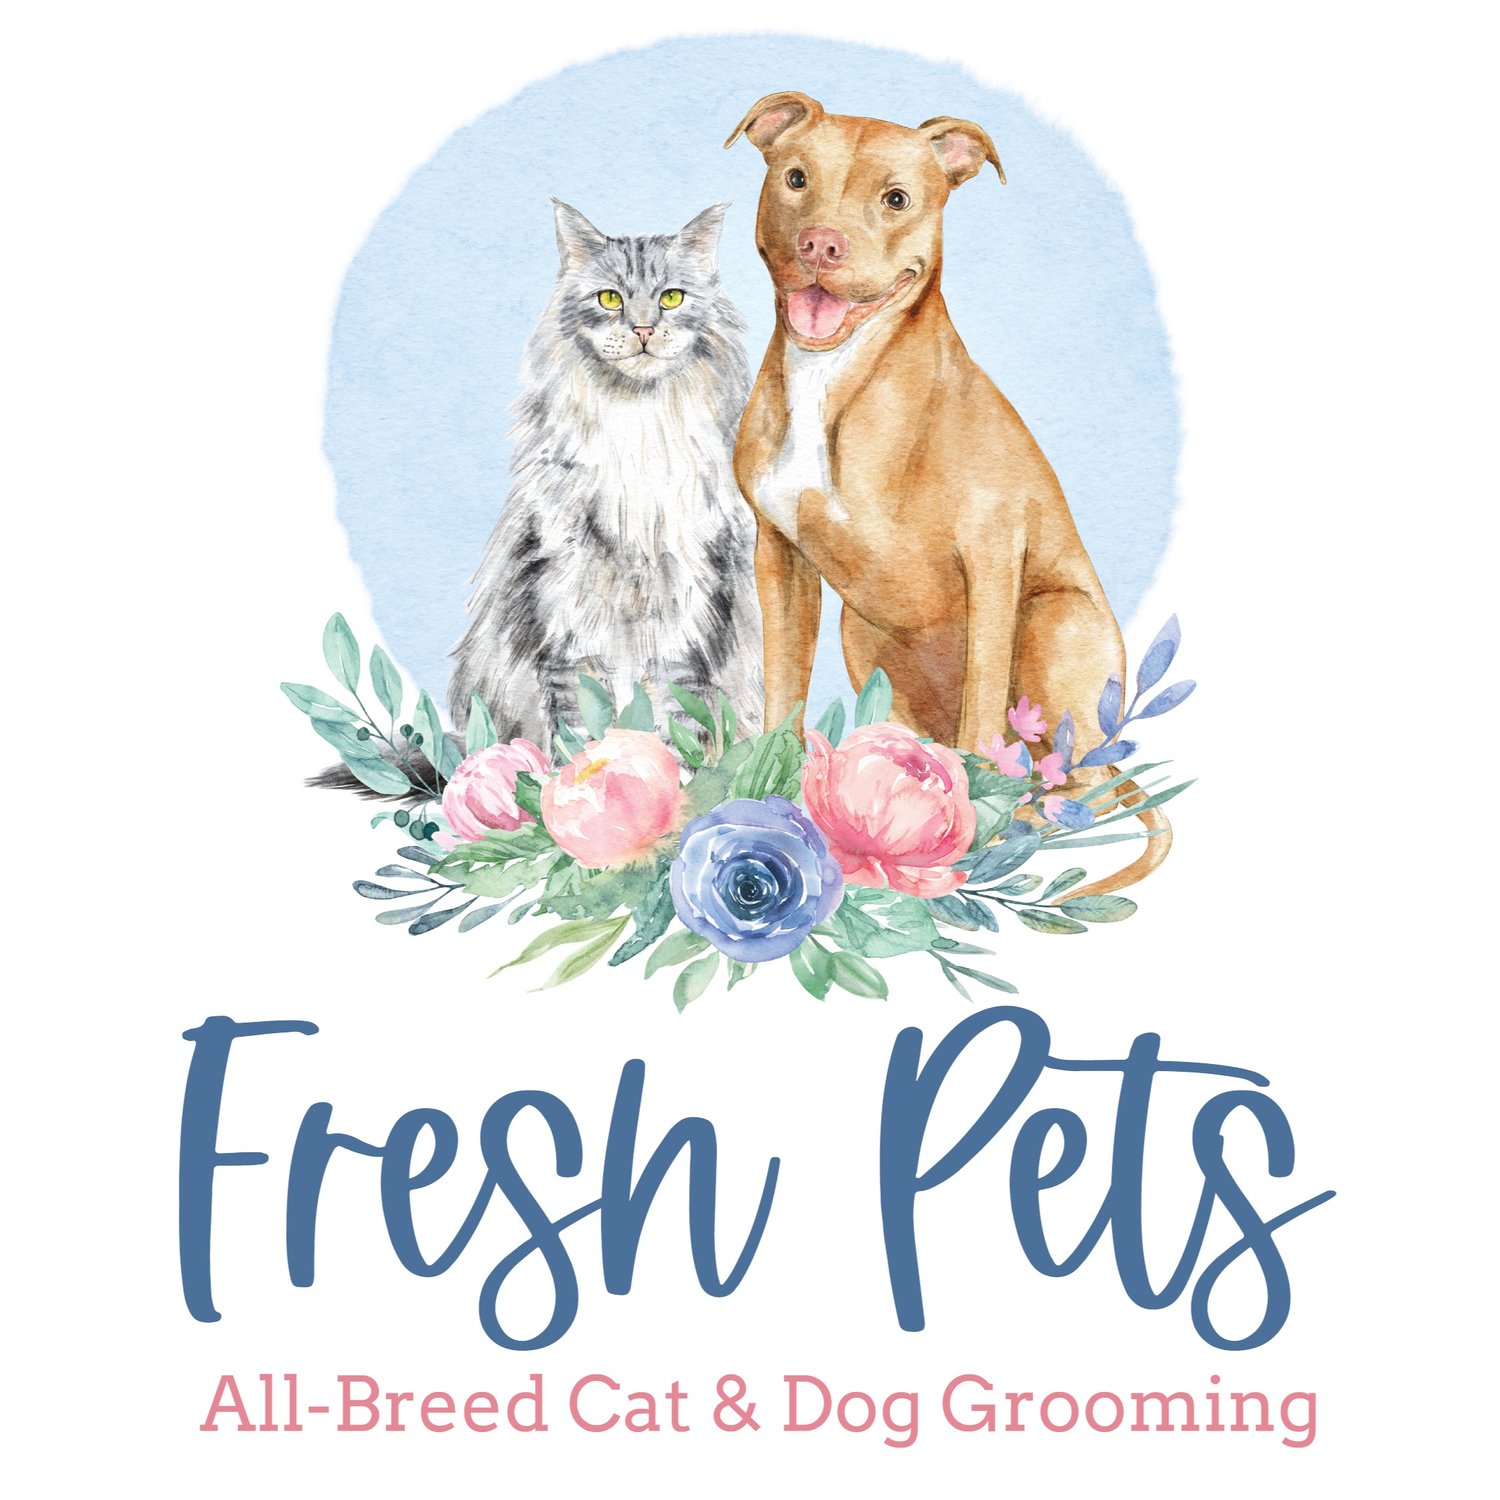 Fresh Pets Grooming - Cat &amp; Dog Grooming, Nail Trims, Haircut, pet groomer